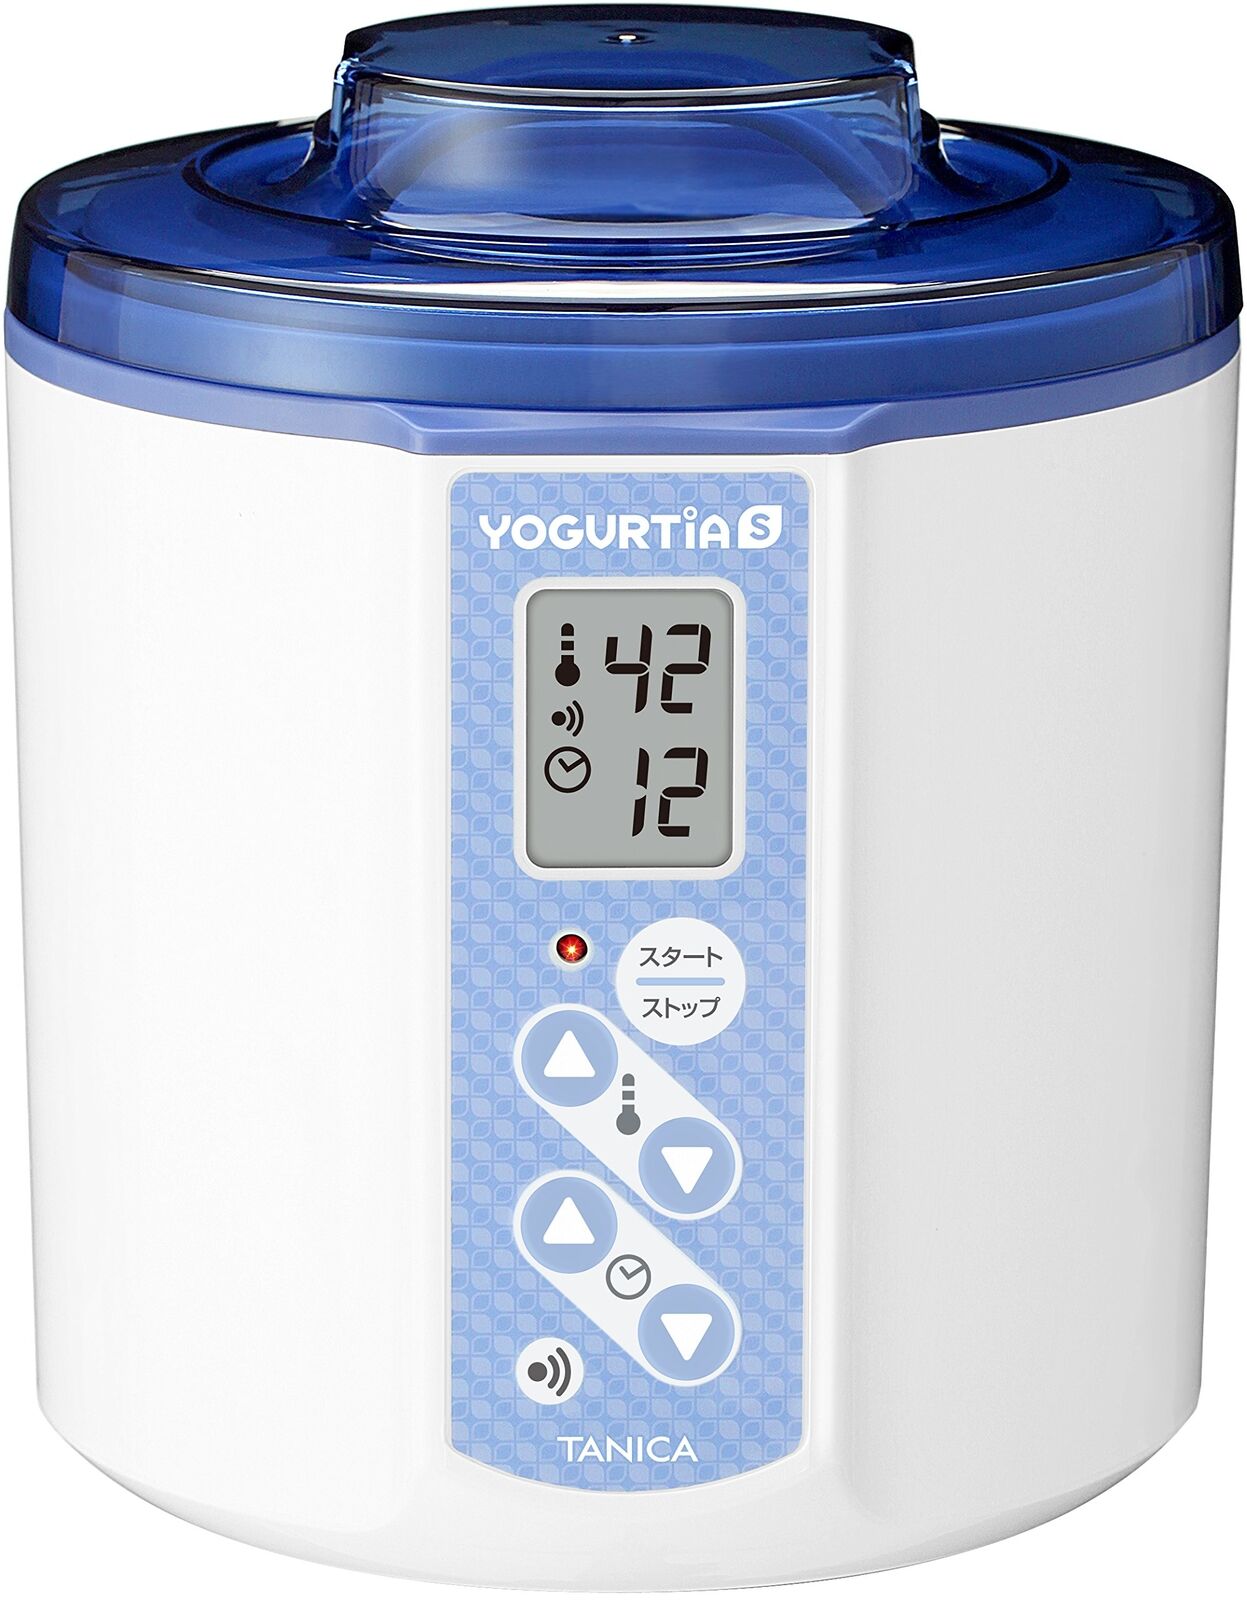 Tanica Temperature Control 25~70°C Yogurt Maker With Timer Buzzer Blue